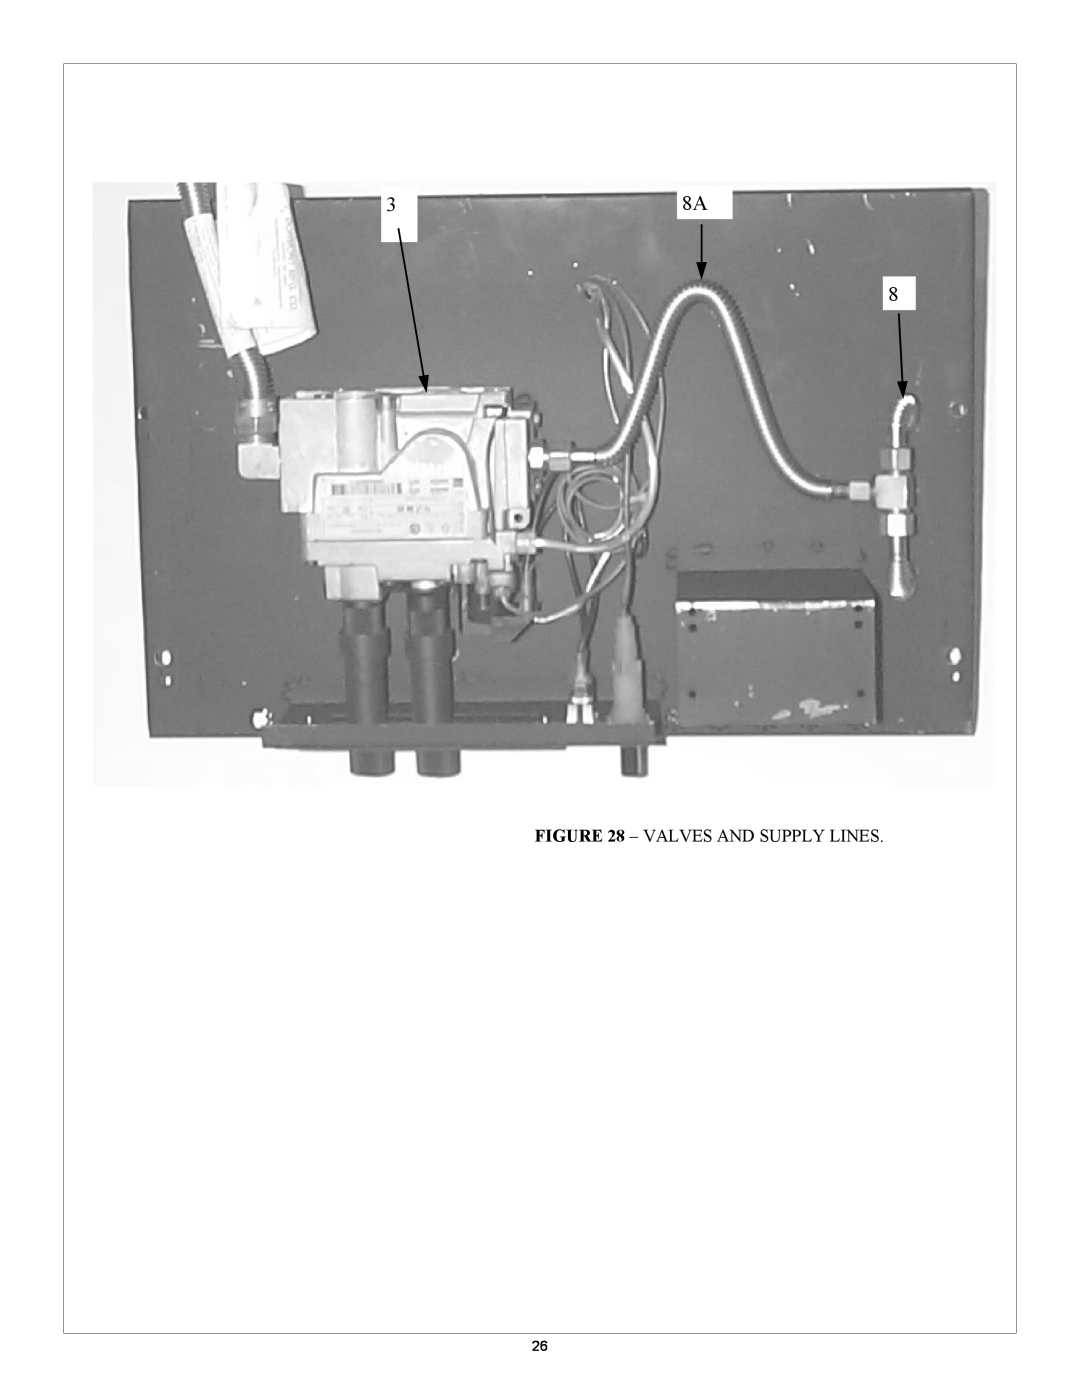 New Buck Corporation GAS STOVE HEATER installation manual 